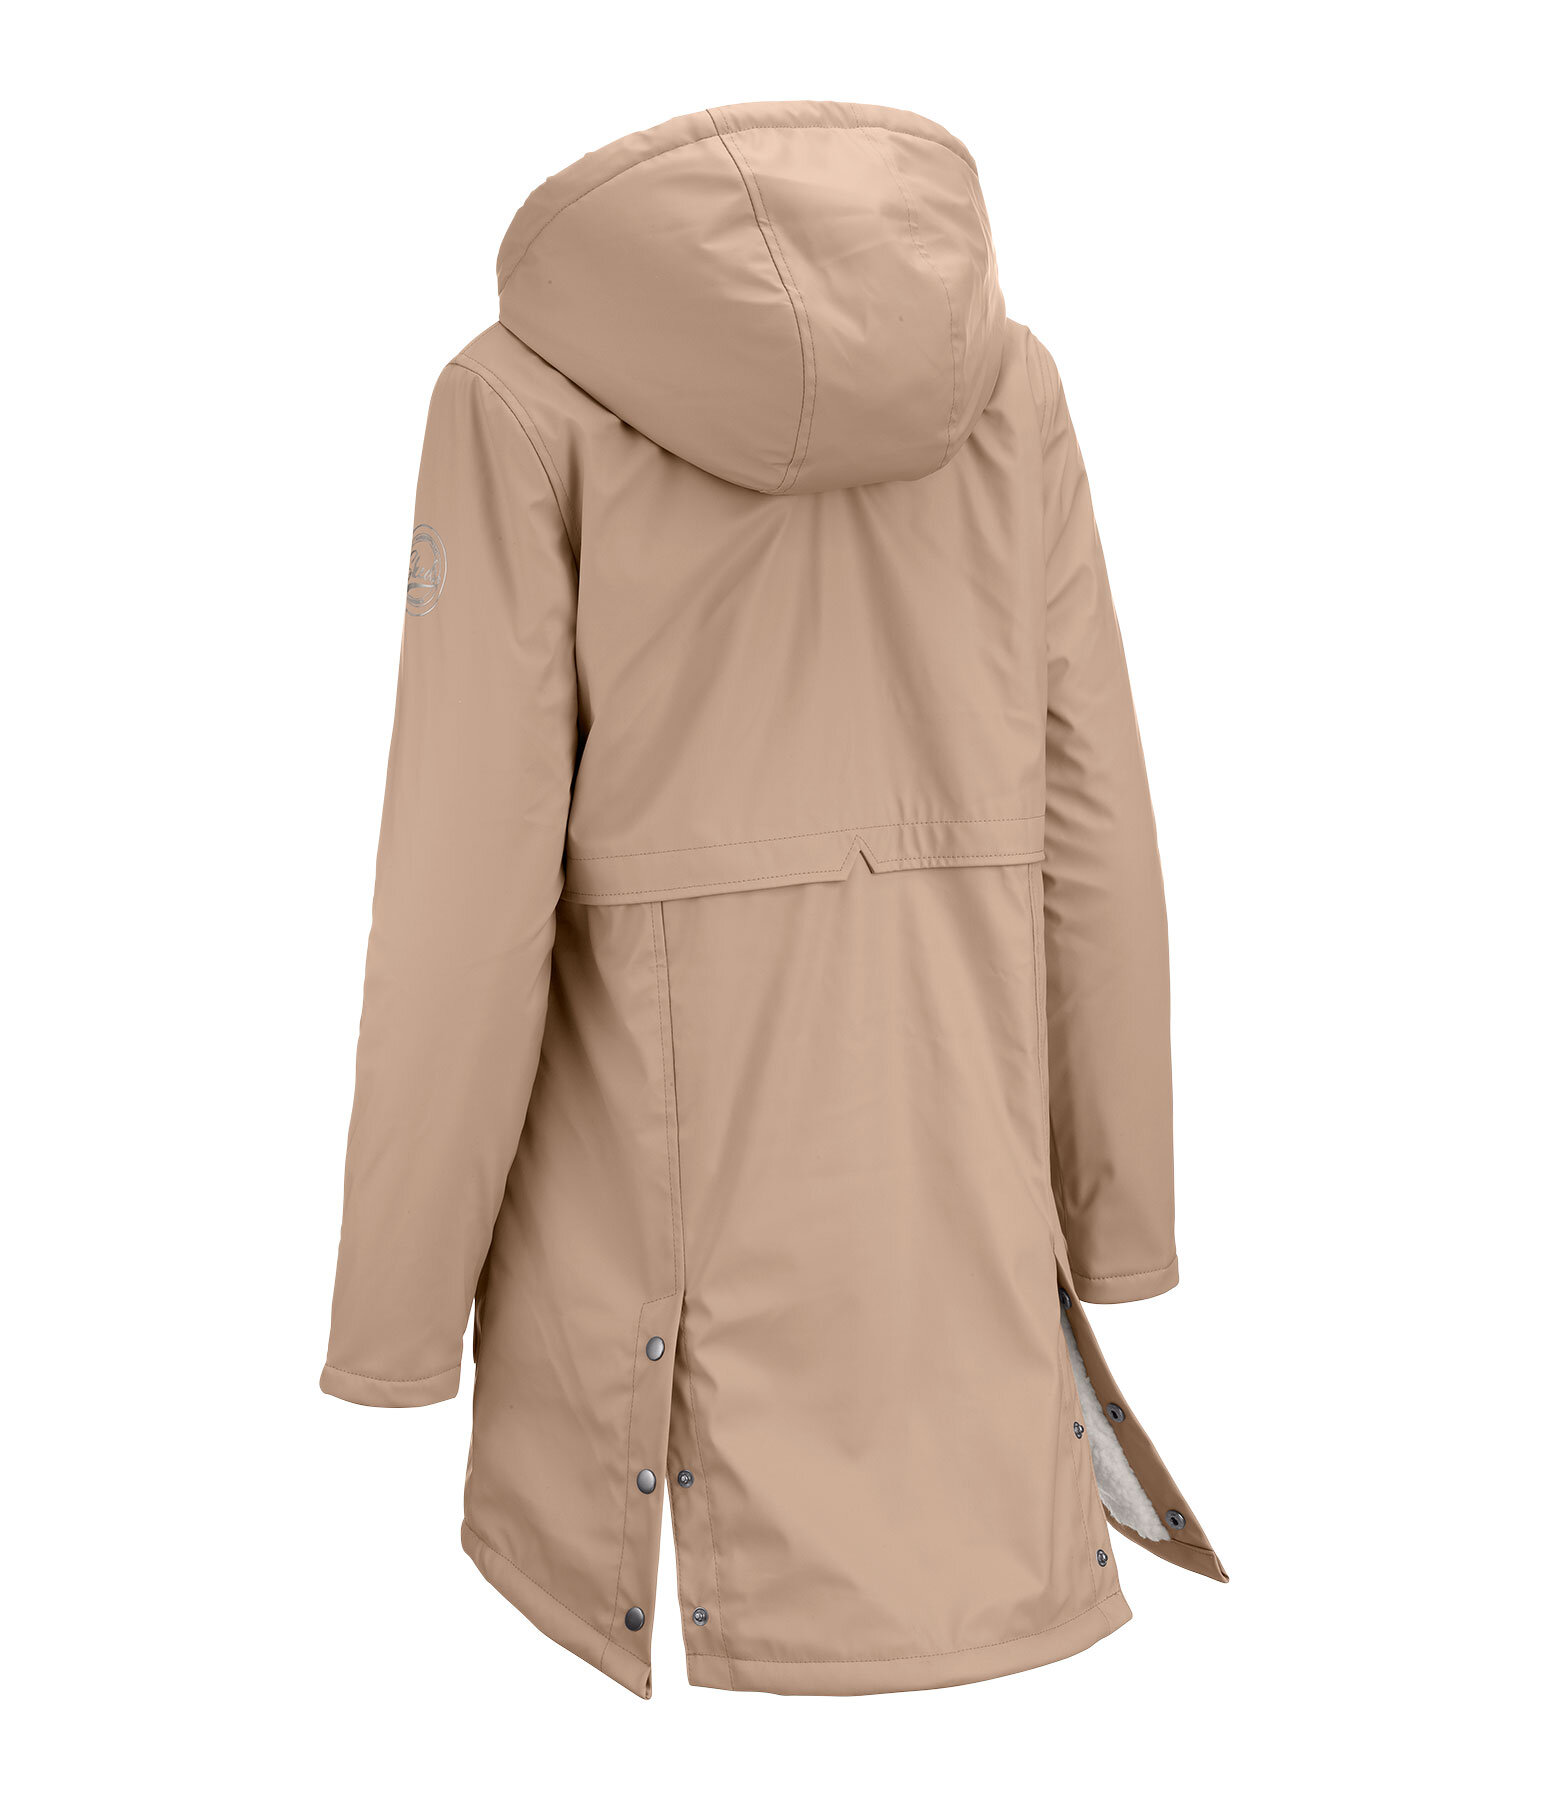 Manteau de pluie  capuche avec doublure Teddy  Nella II